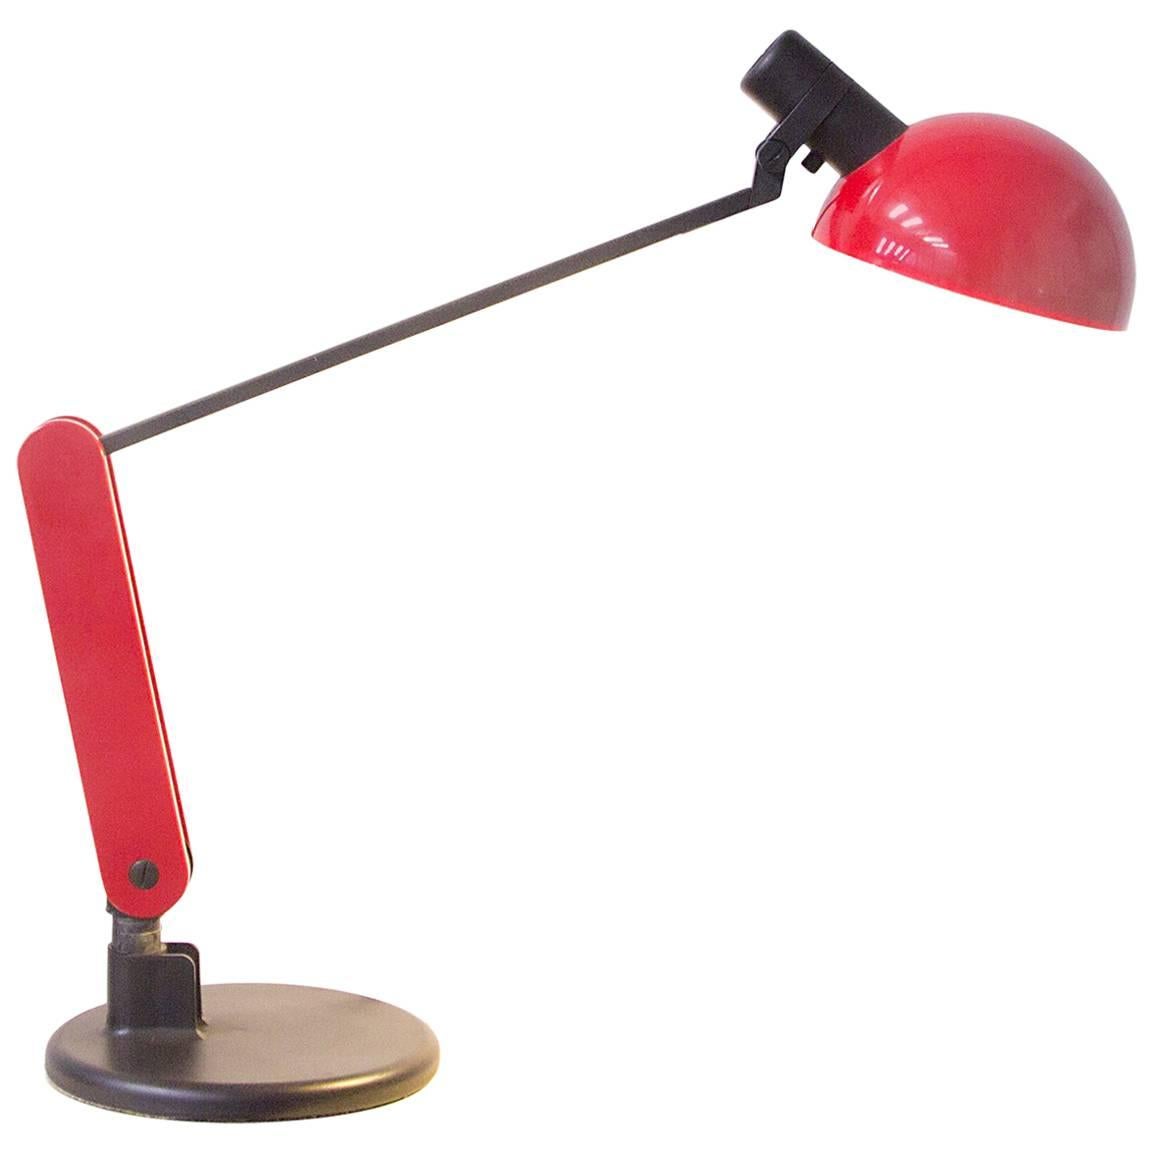 Circa 1970, Guzzini Red and Black Desk Lamp with Heavy Base